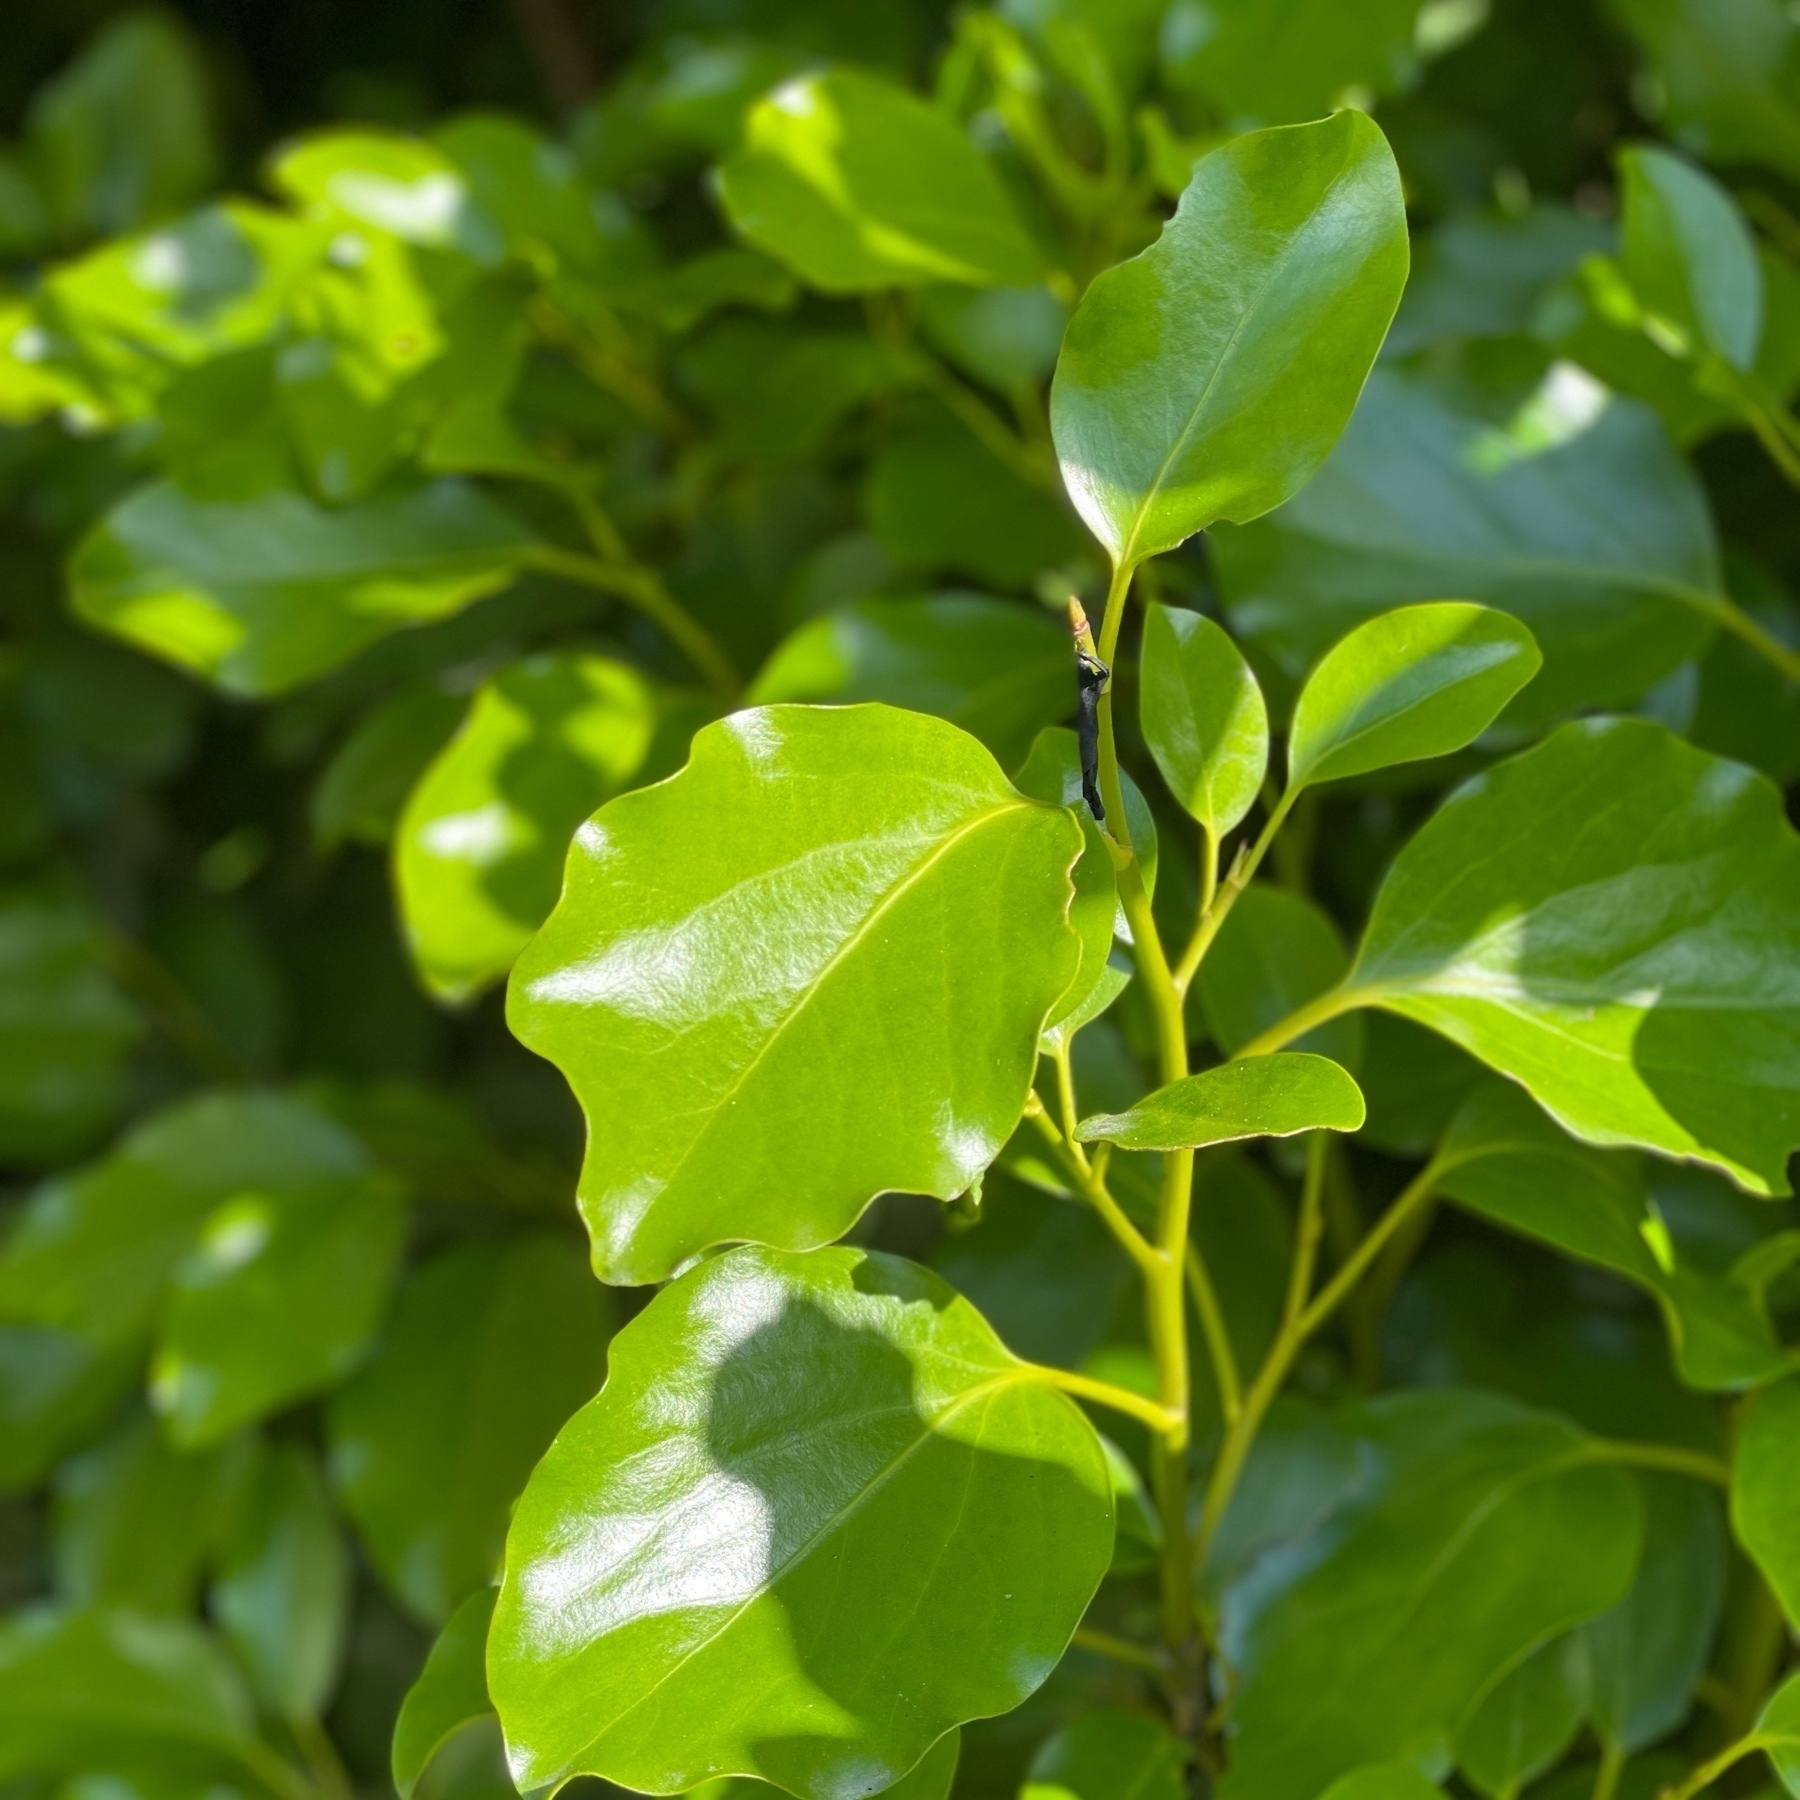 Profusion of glossy green leaves of the Kapuka bush